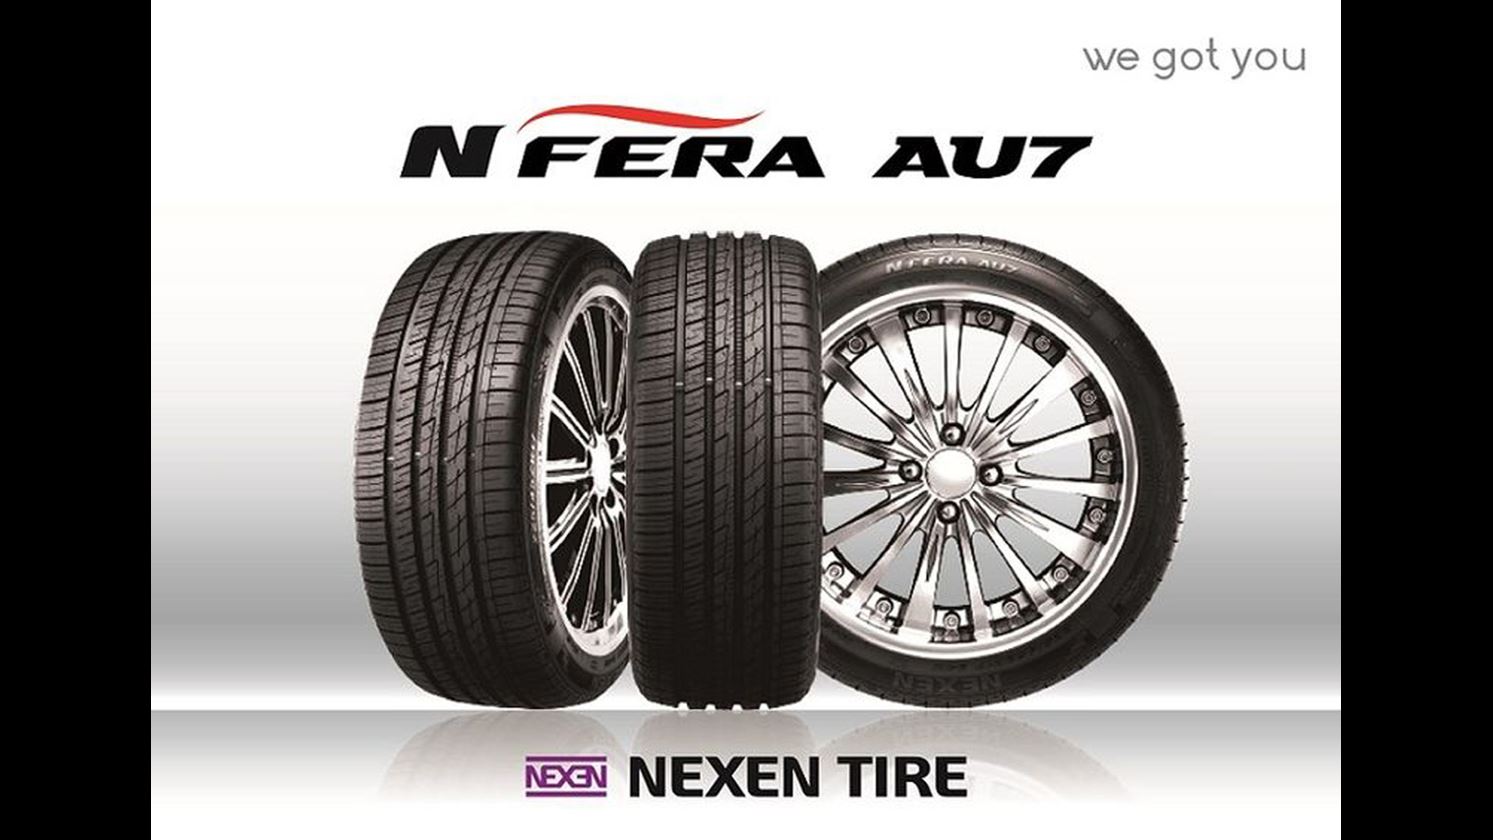 NEXEN TIRE supplies original equipment tires for Volkswagen Jetta